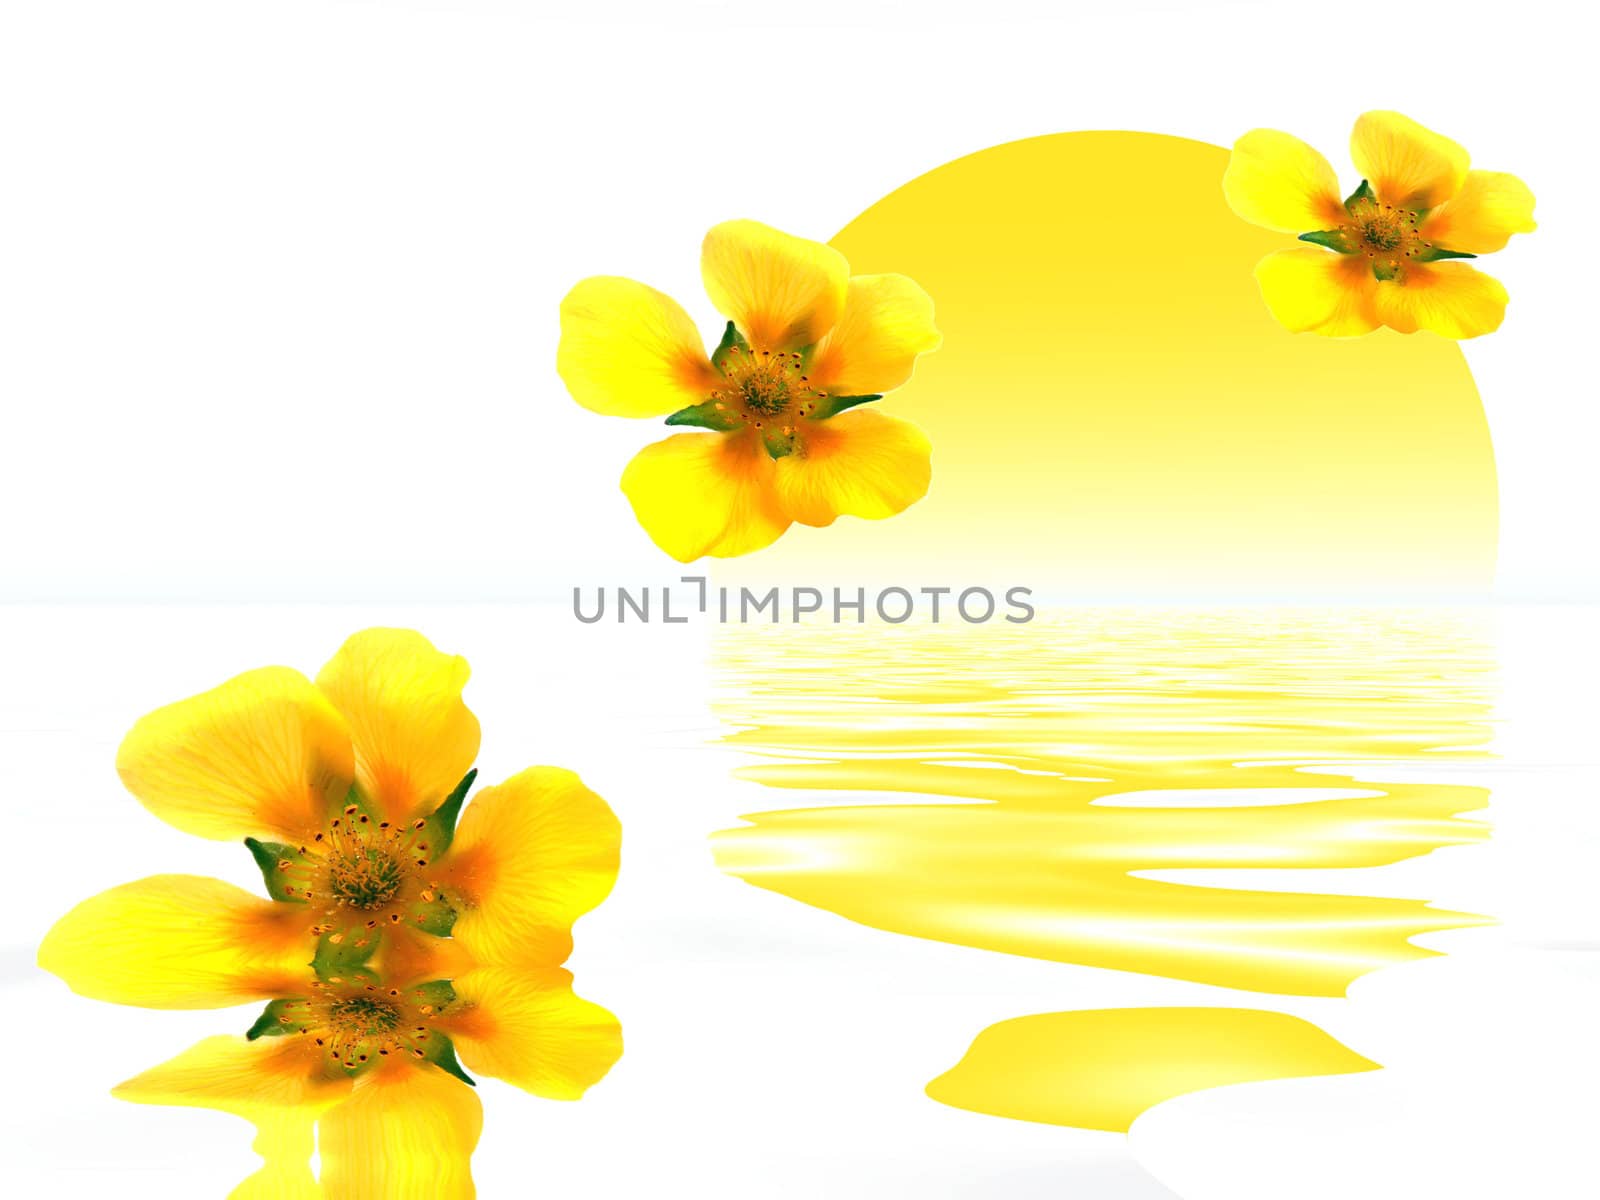 the yellow flowers by njaj